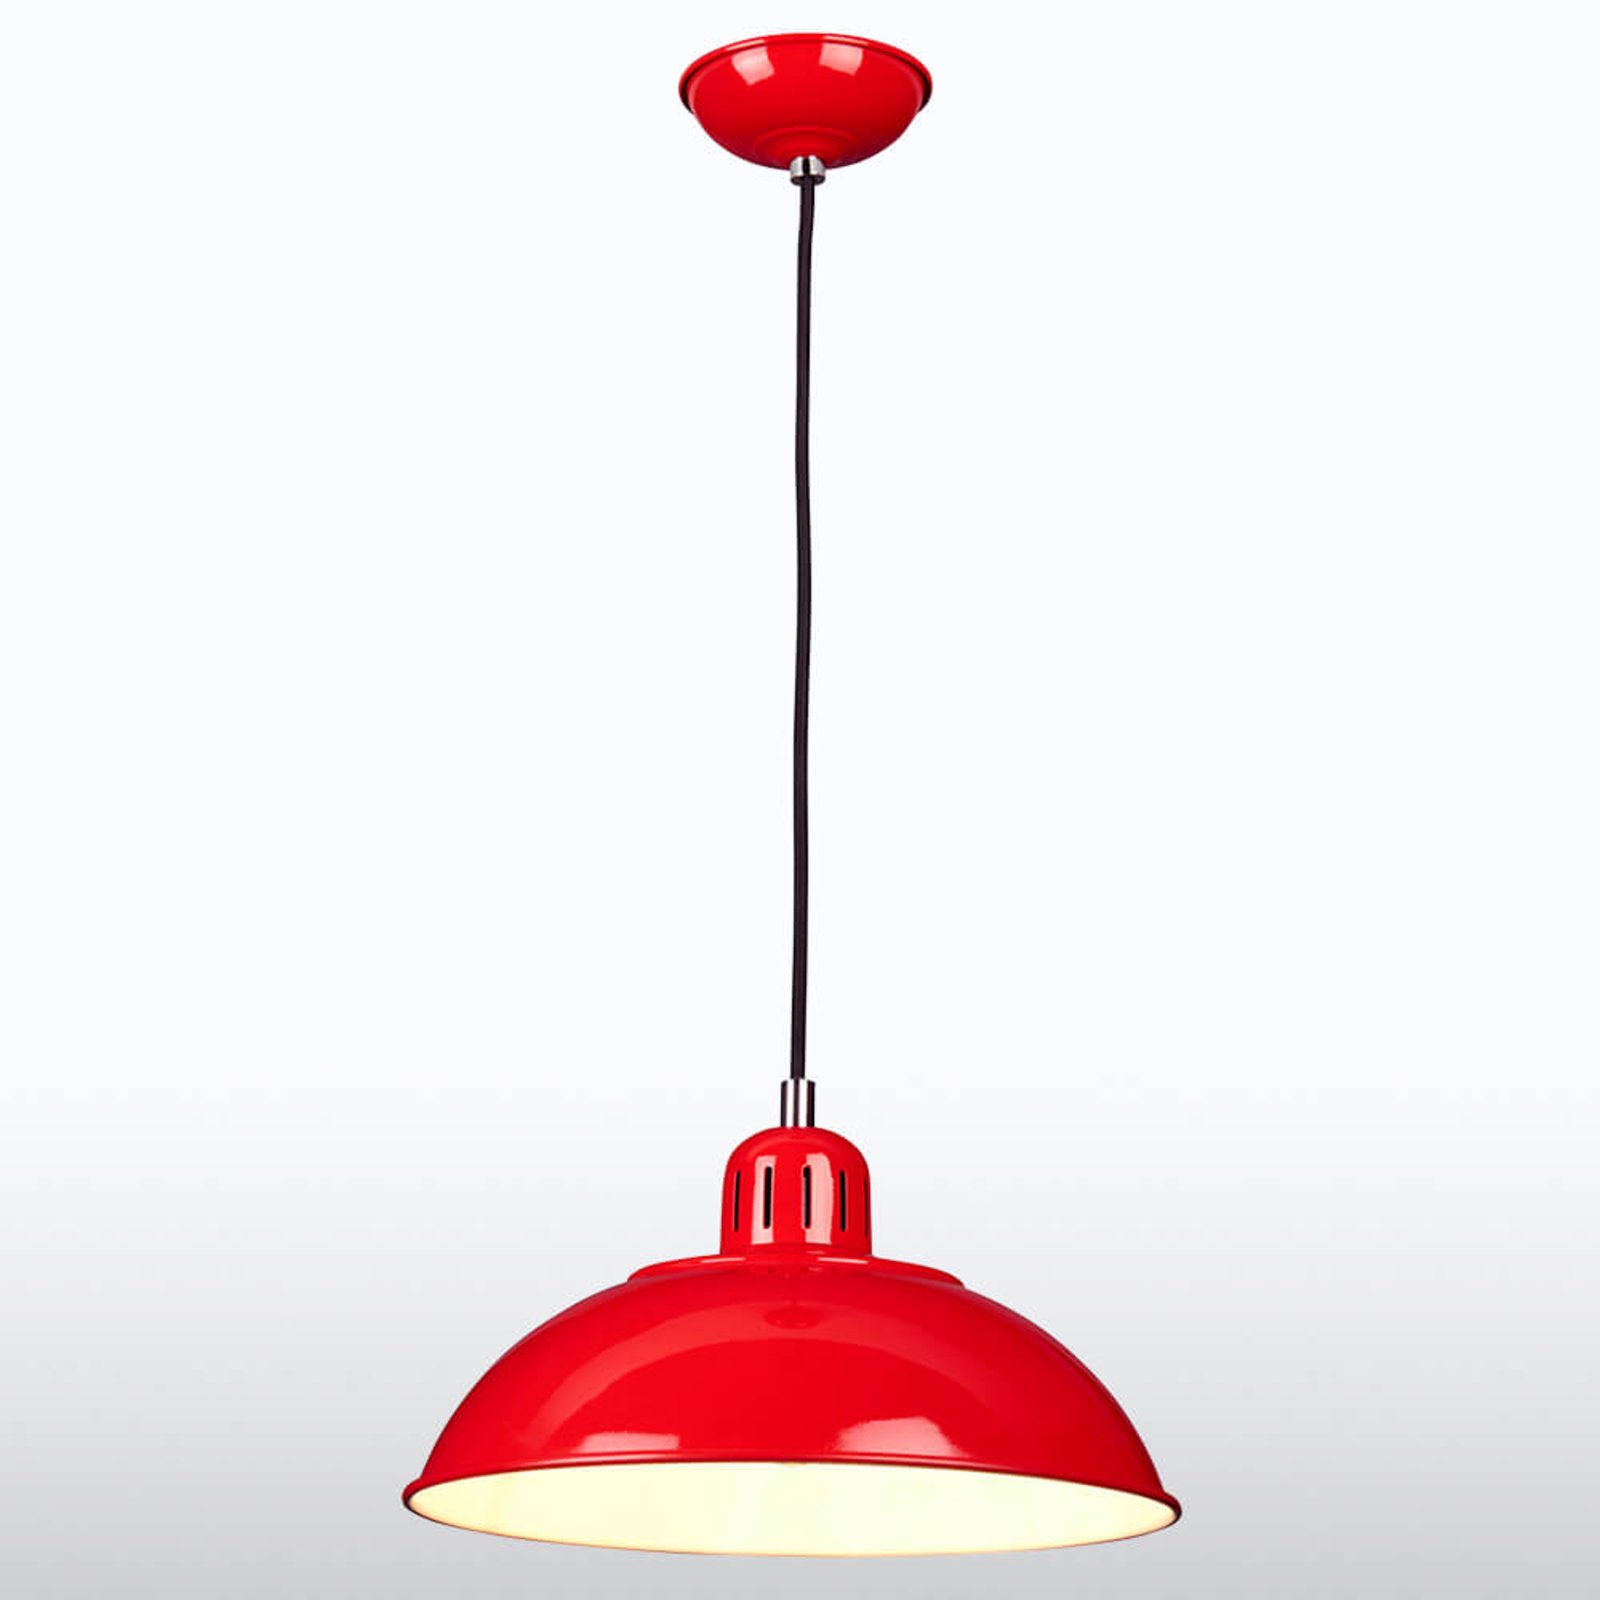 Rode hanglamp Franklin in retrodesign